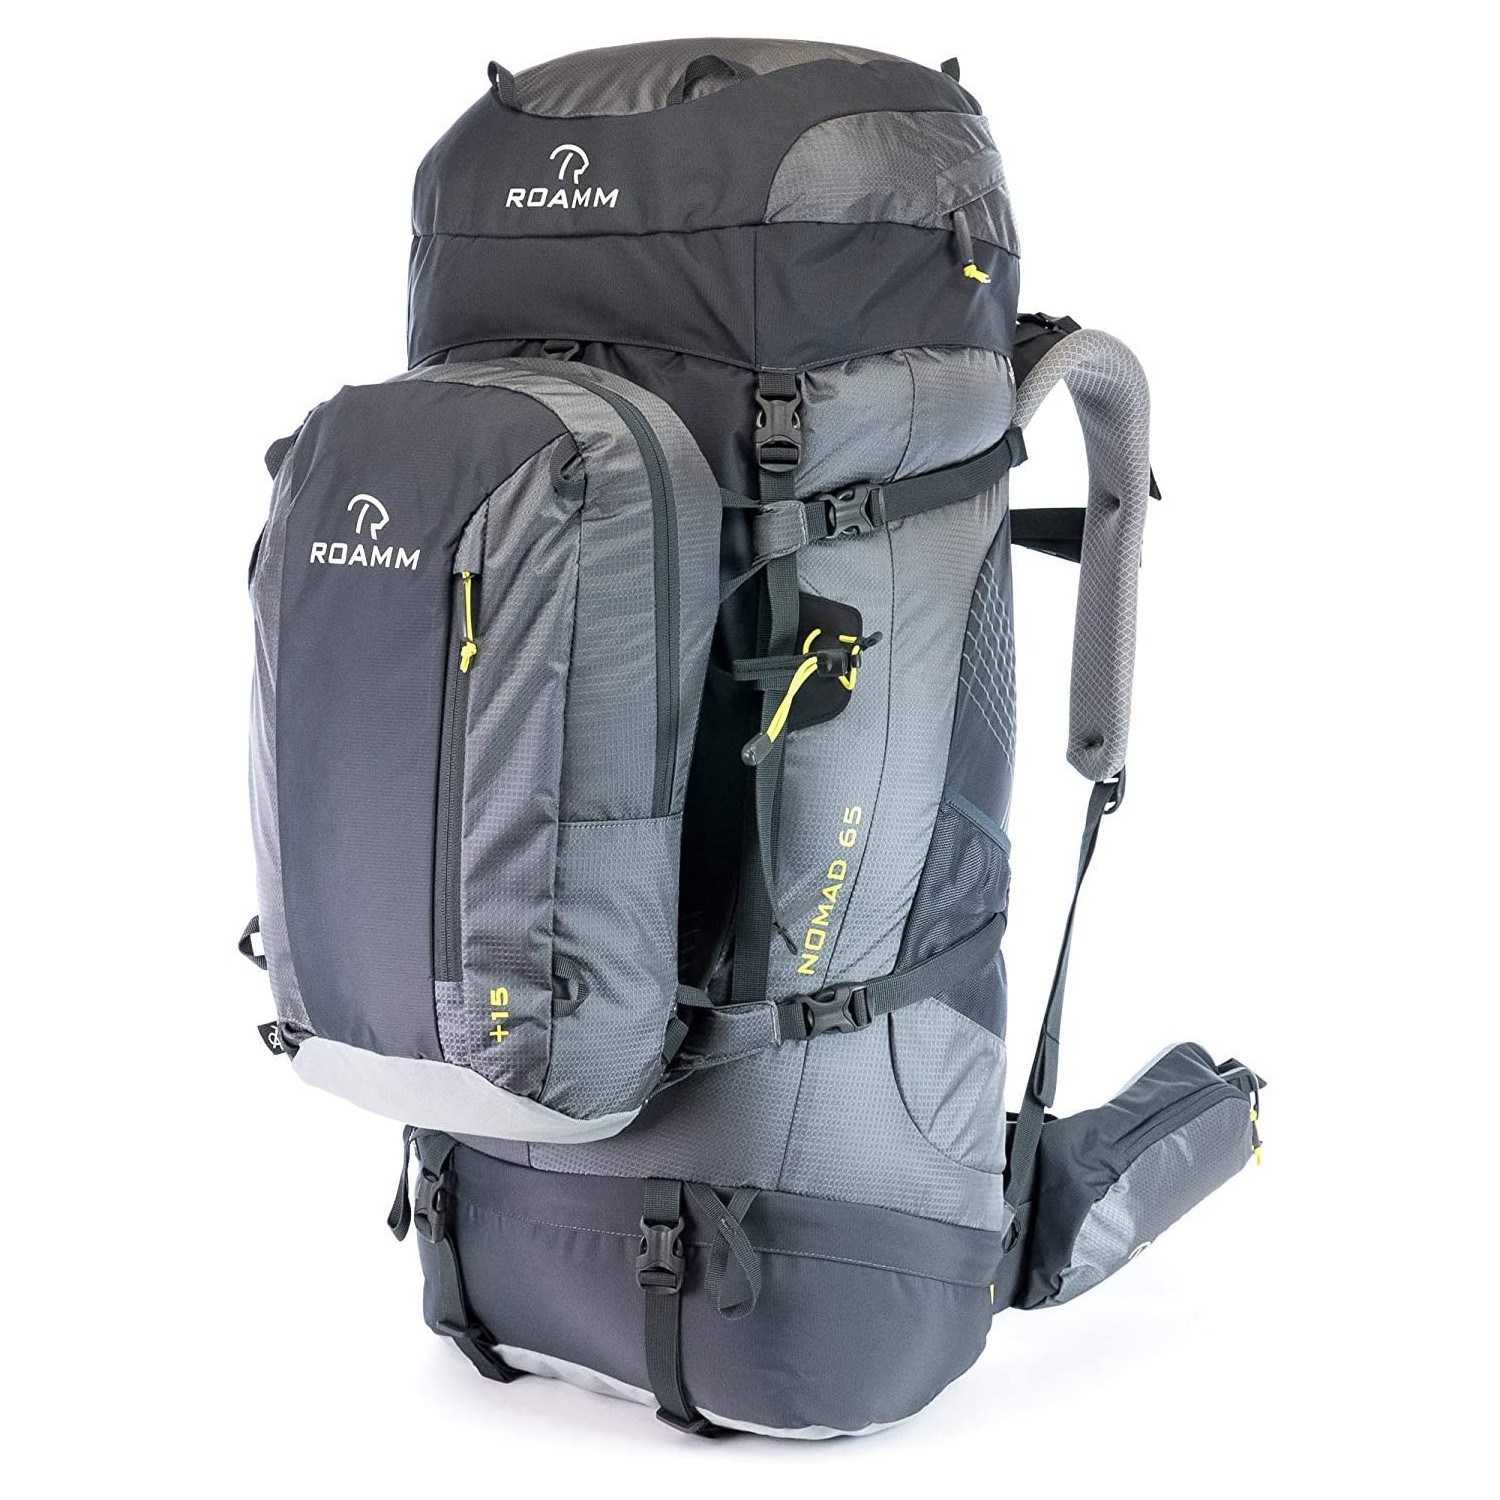 Roamm Nomad 65 +15L Backpack Side View